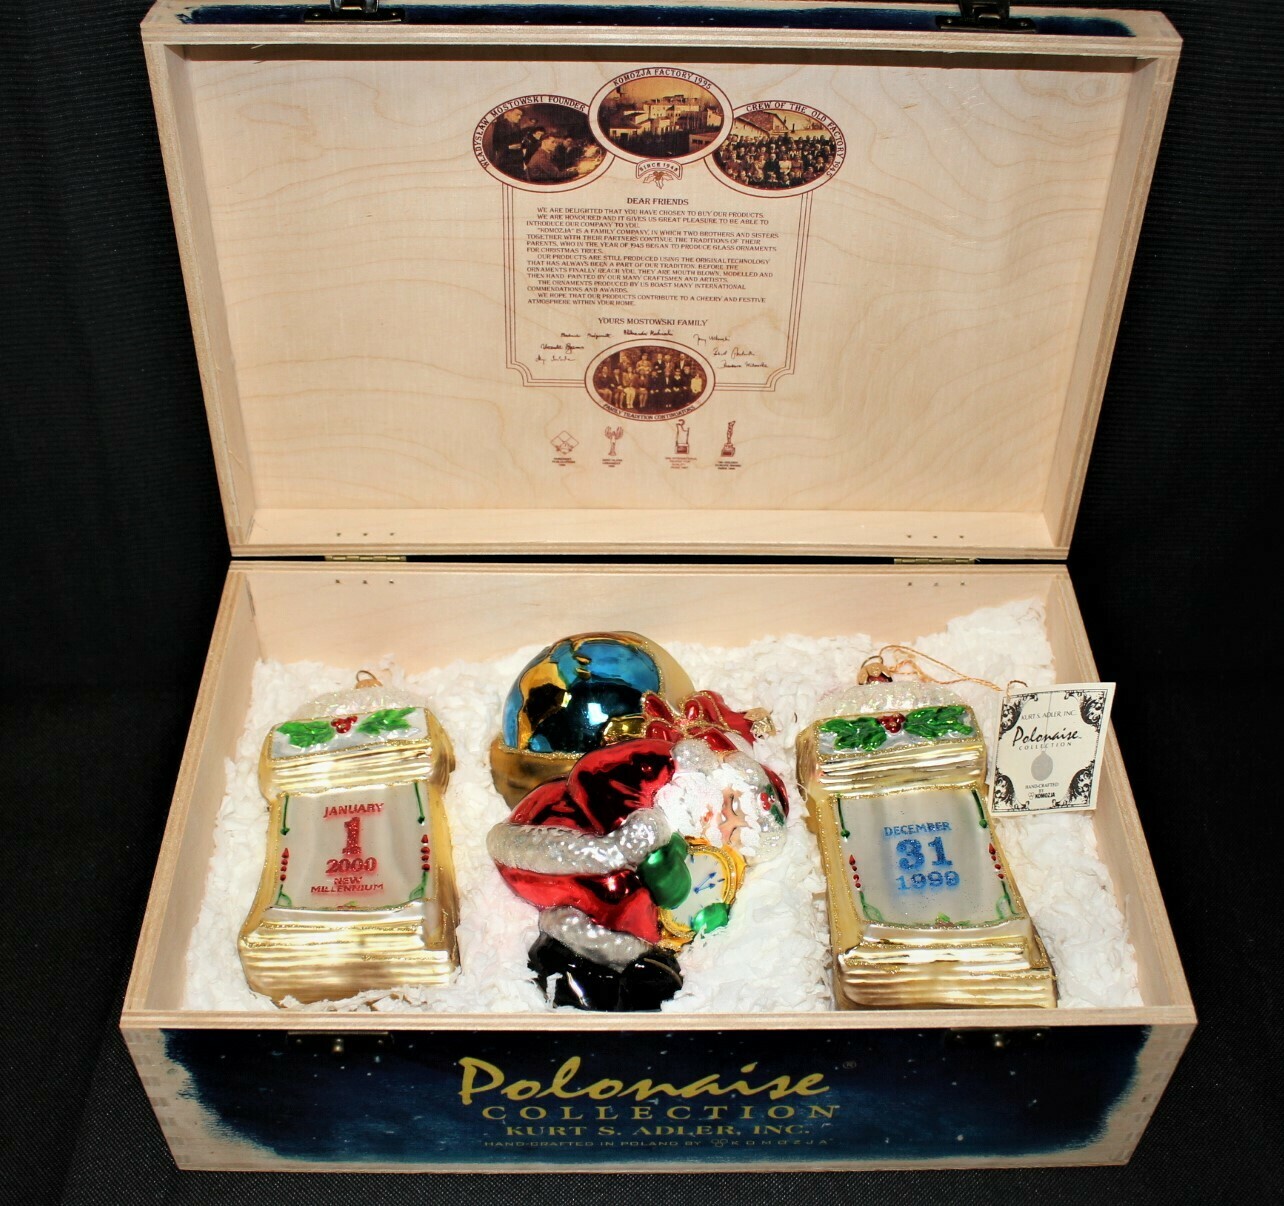 Polonaise Collection Millennium 2000 Glass Ornaments by Kurt S. Alder in Wood Box